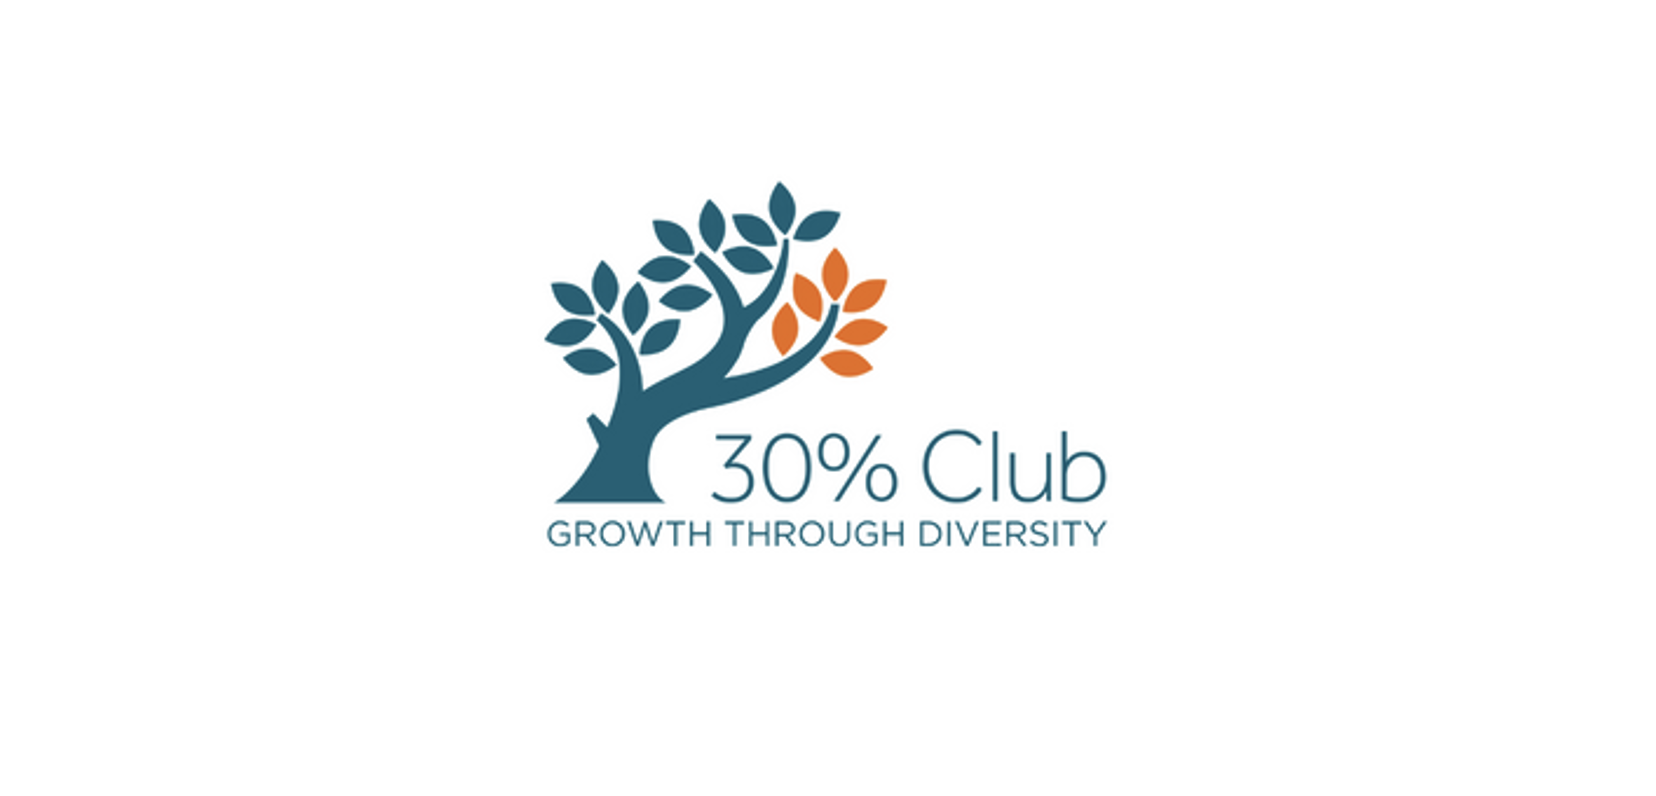 Windo_Diversity_Pledges_30_Club